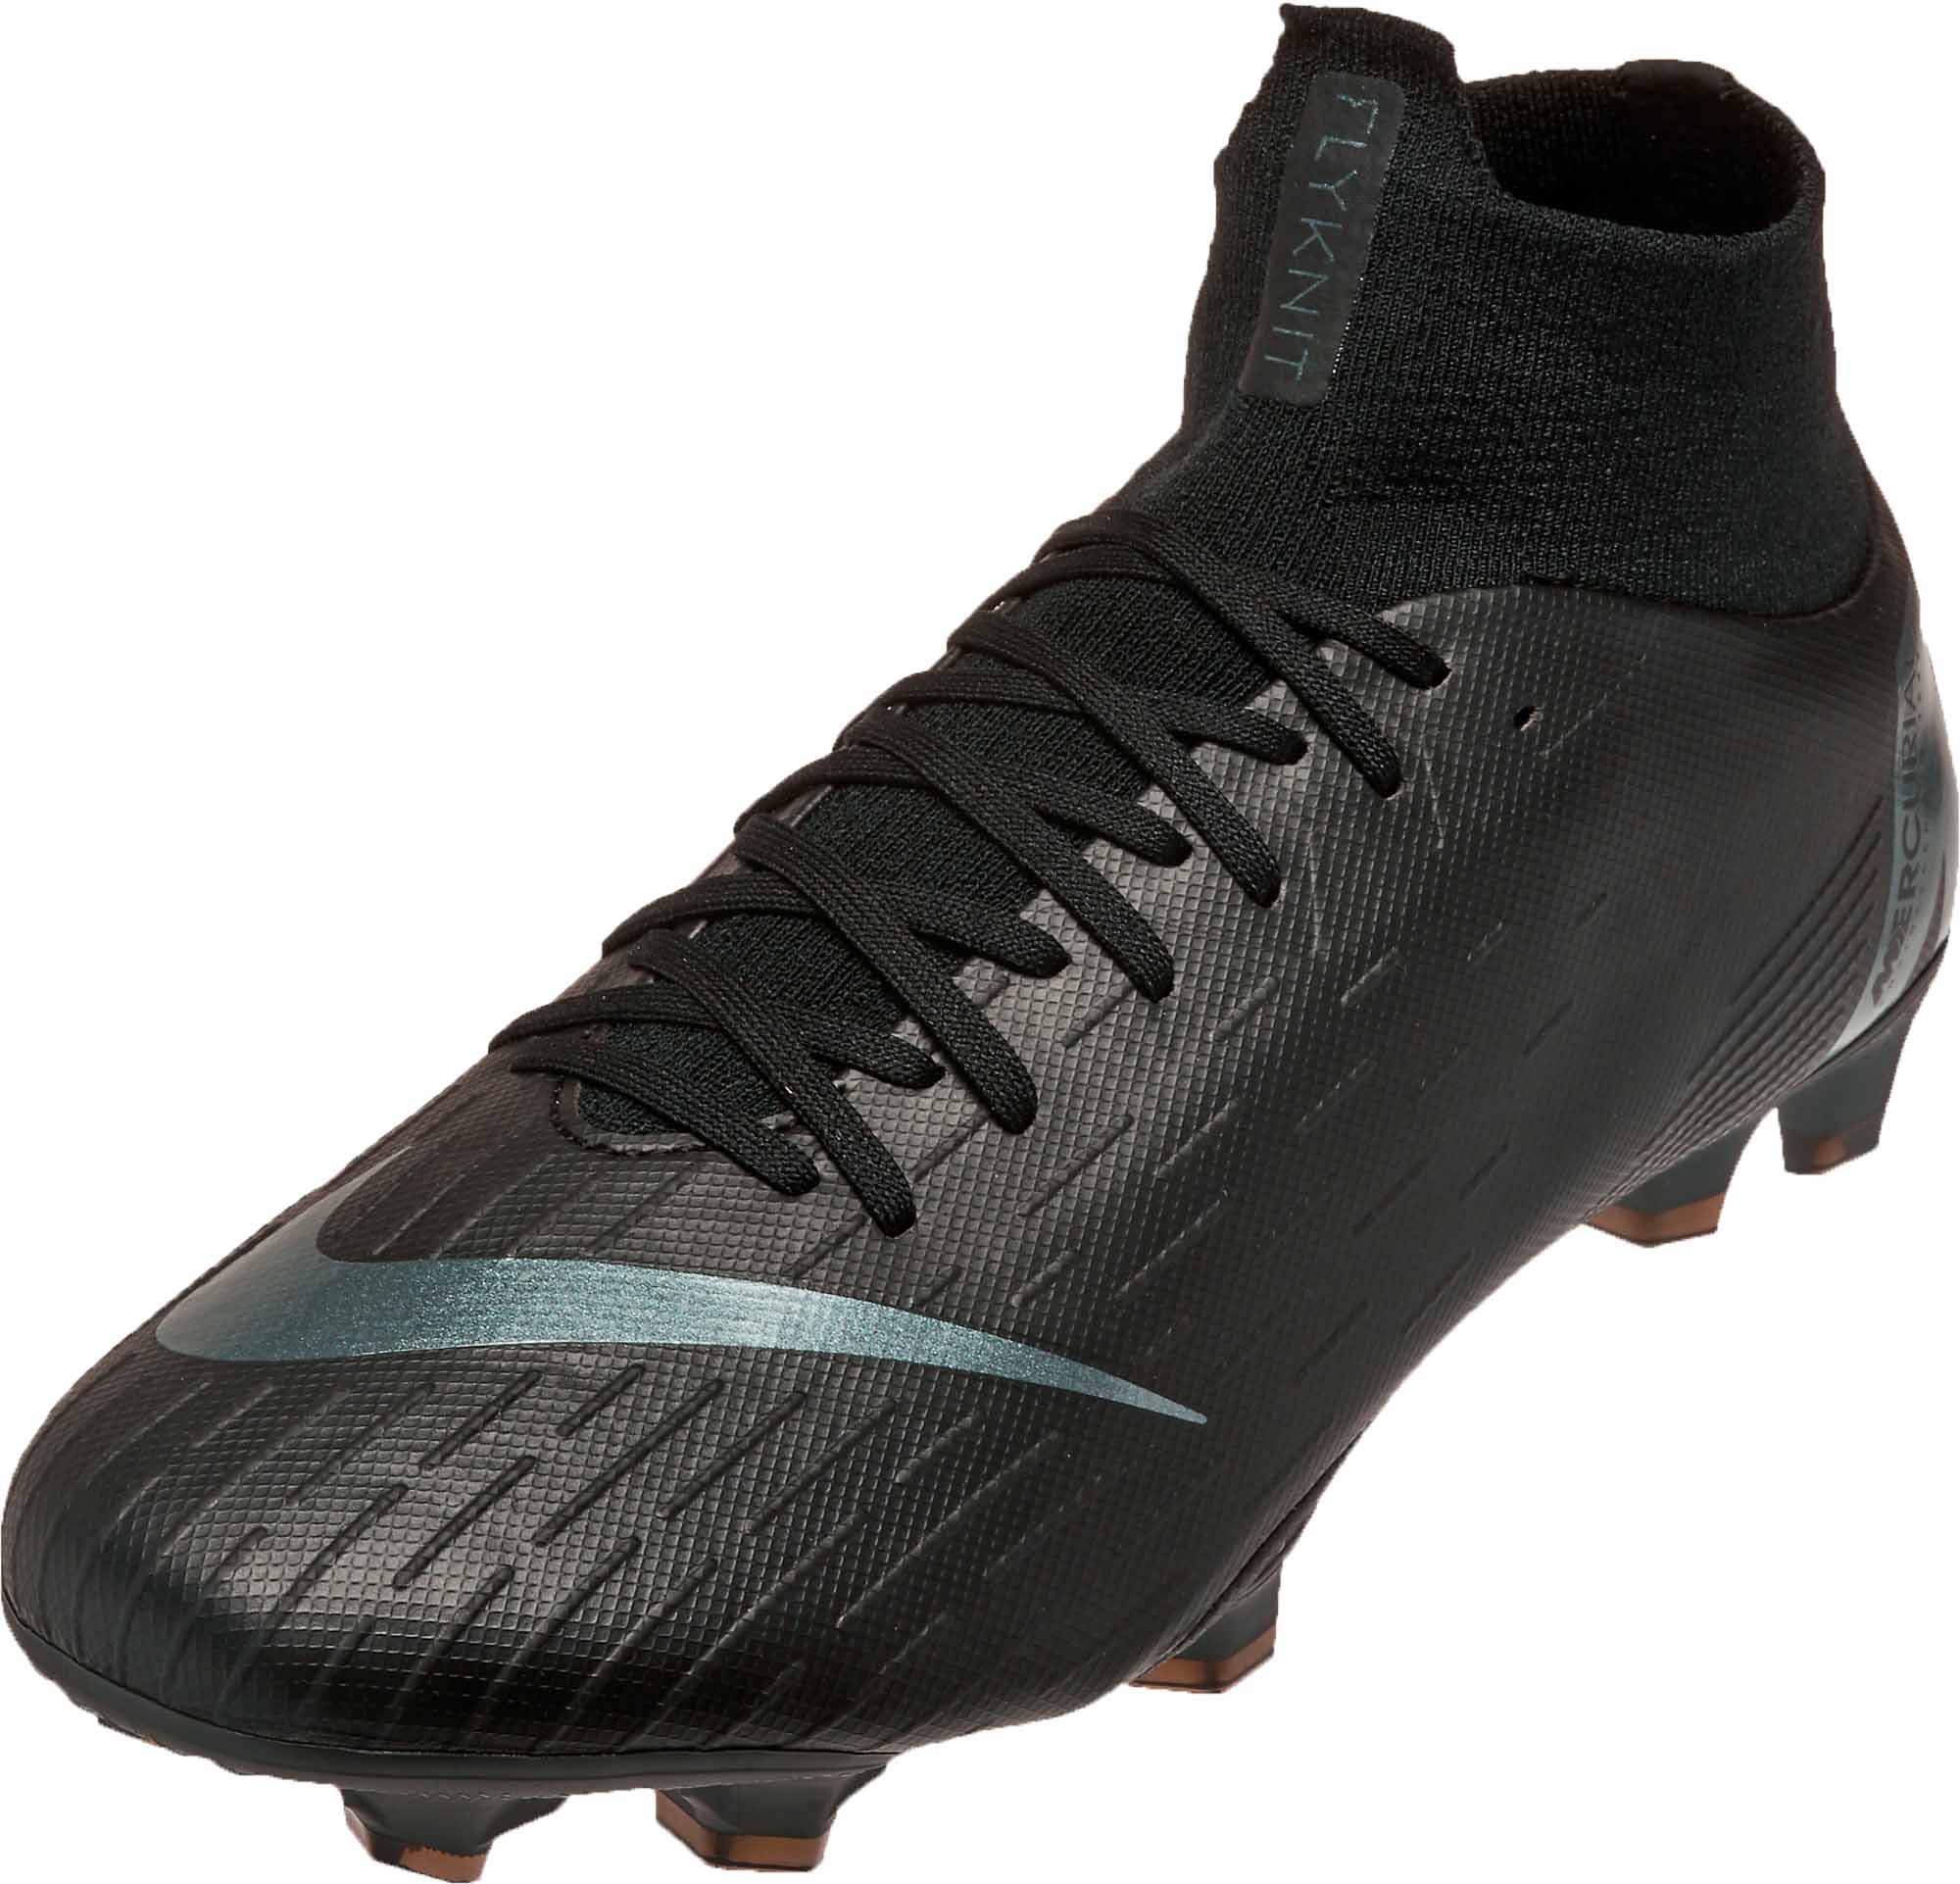 Nike Superfly 6 FG - Black/Black - SoccerPro